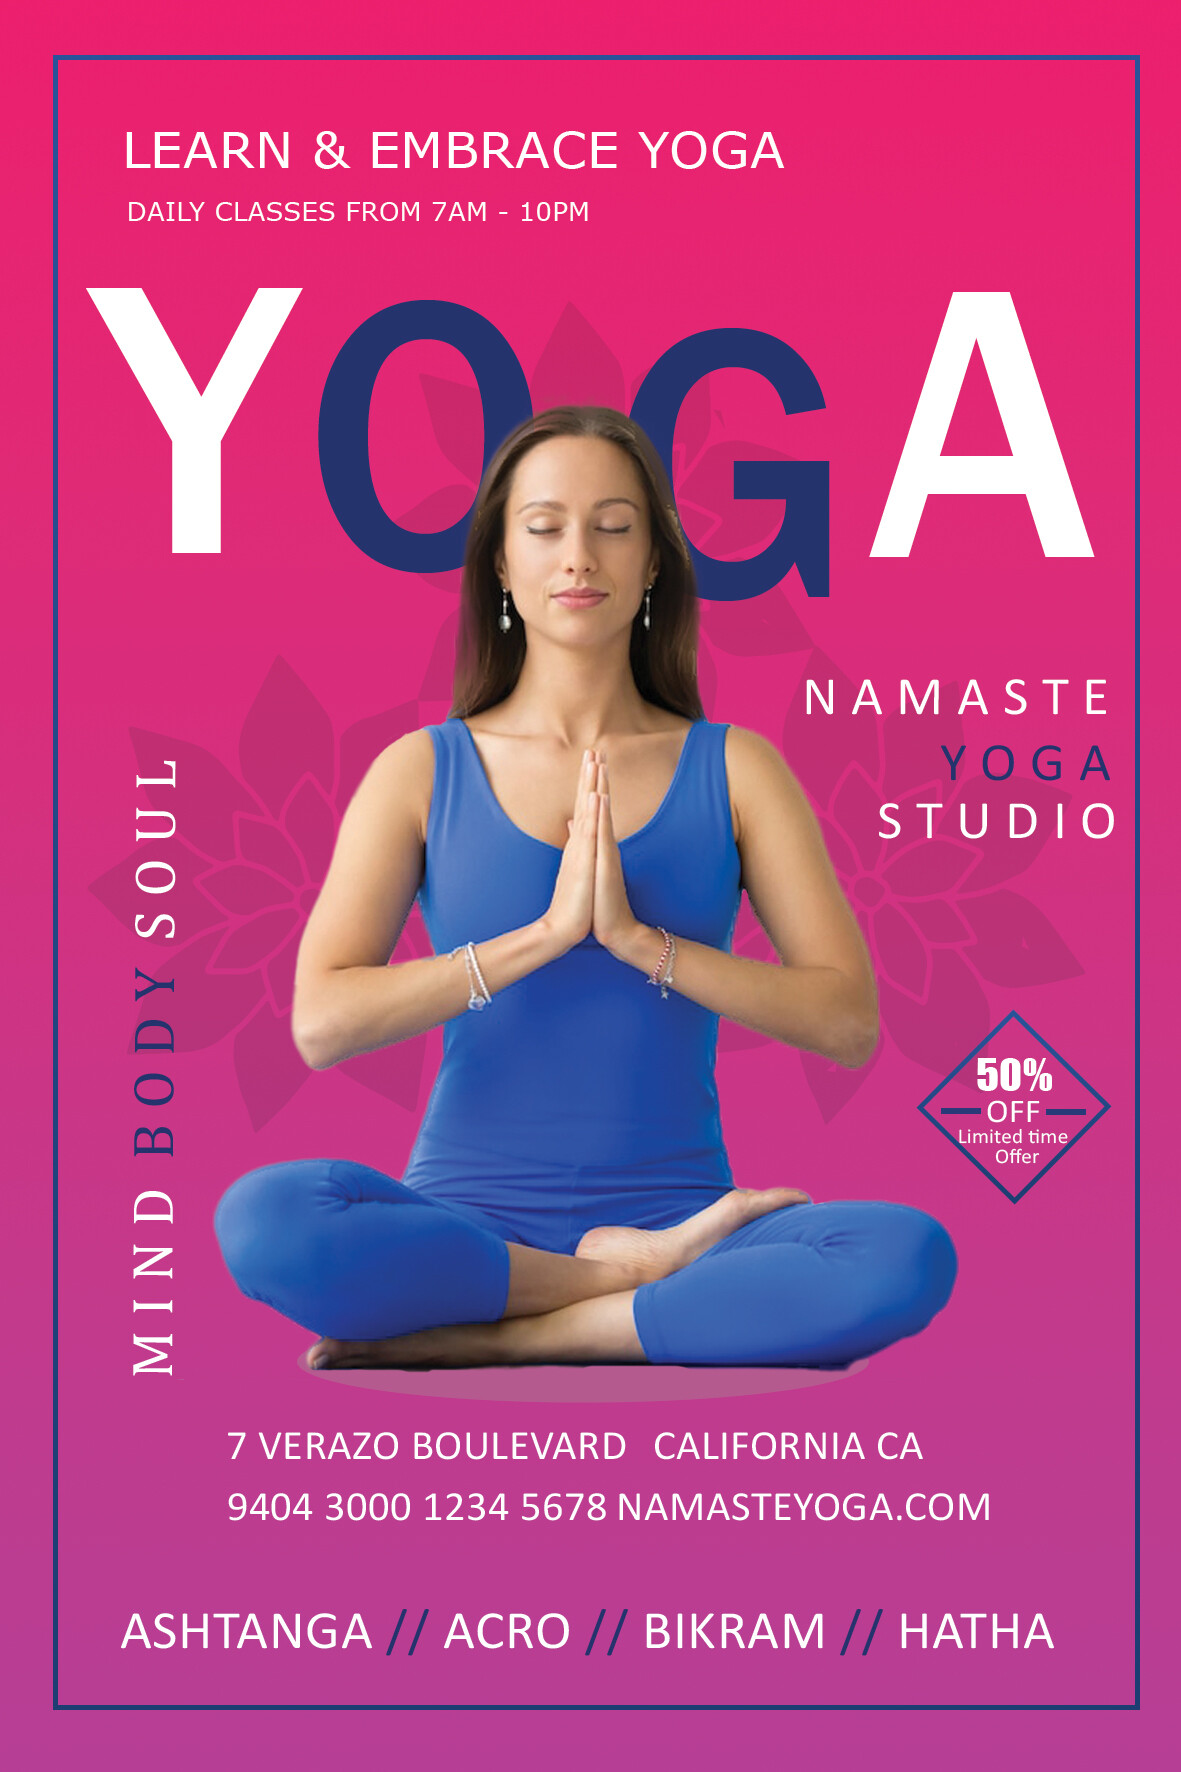 ArtStation - This is Social media Poster Namaste Yoga